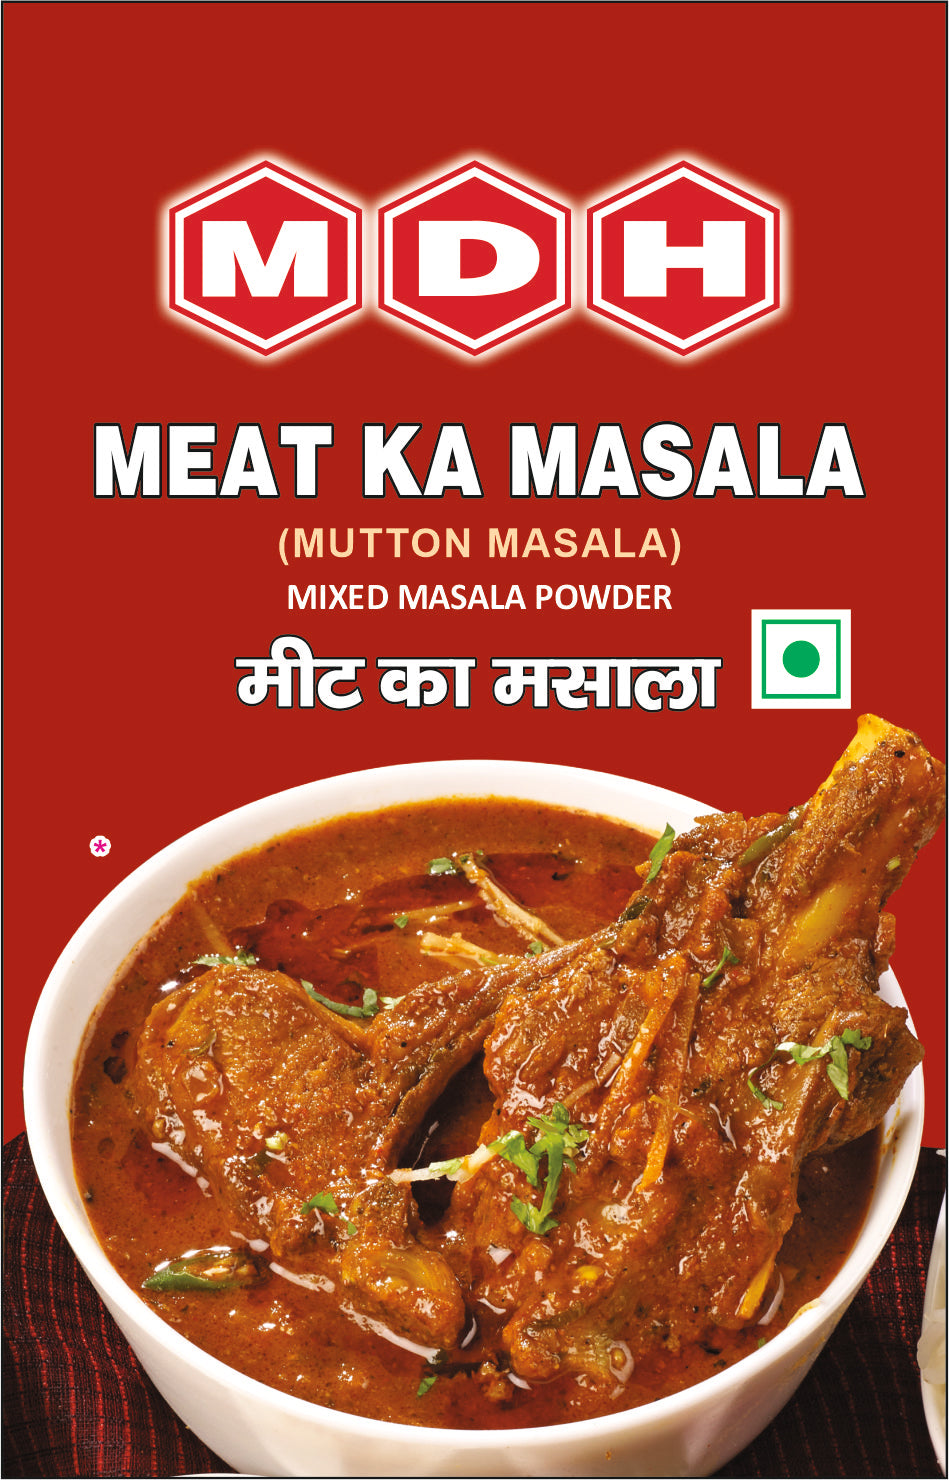 MDH-Meat Masala Powder-100g